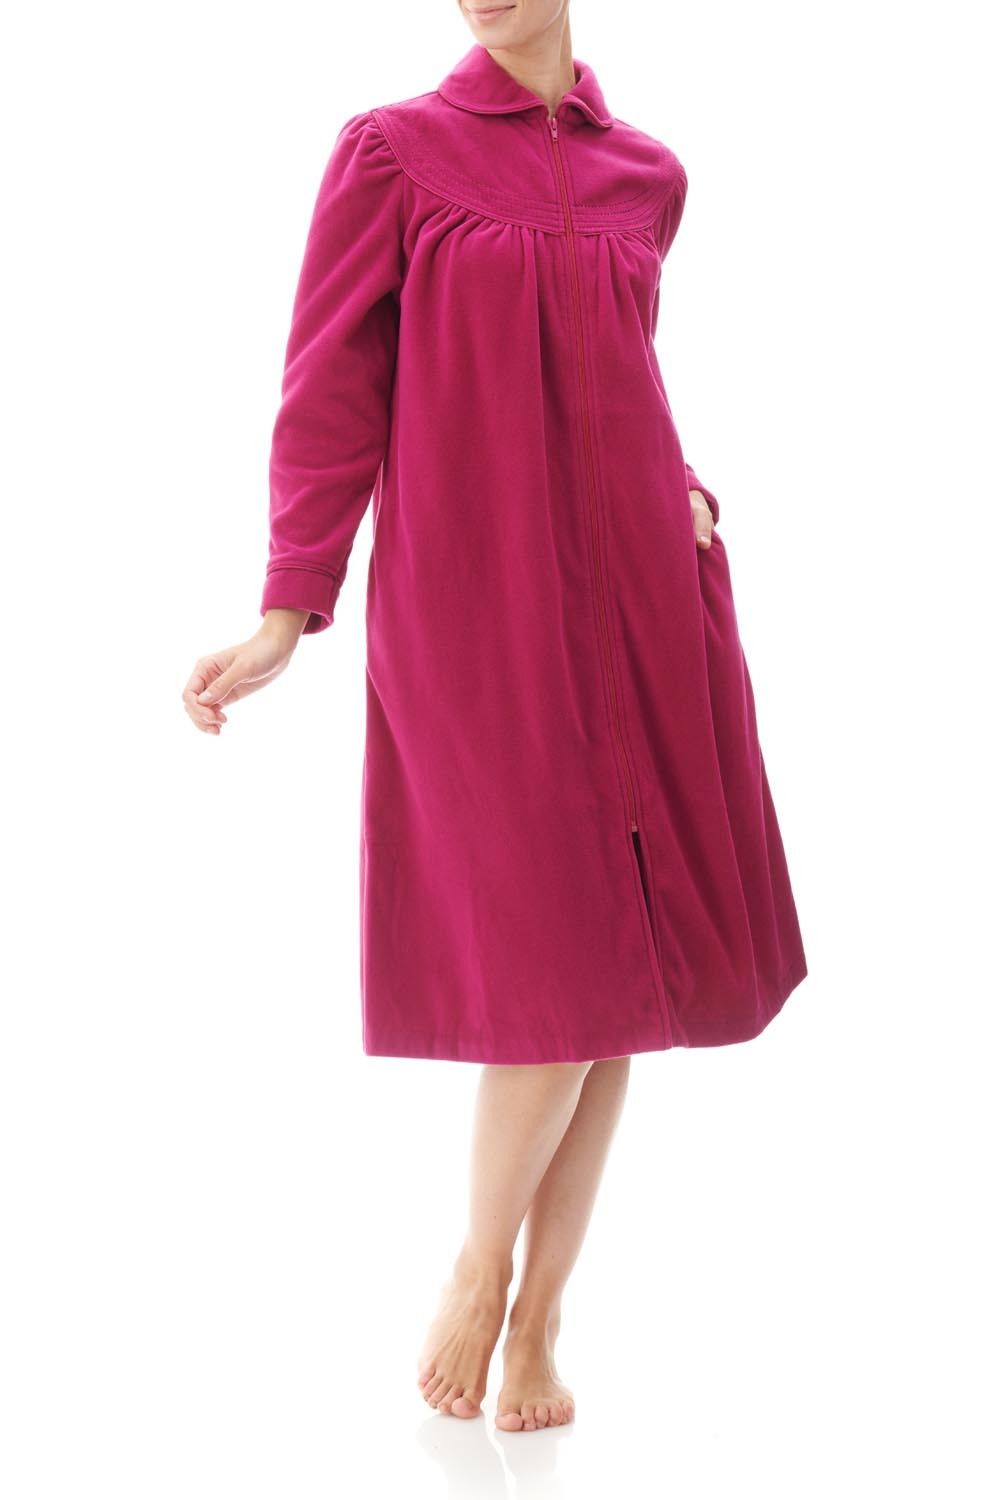 Dressing Gown Ladies Floral Zip Up Bathrobe Slenderella Boucle Fleece House  Coat | eBay